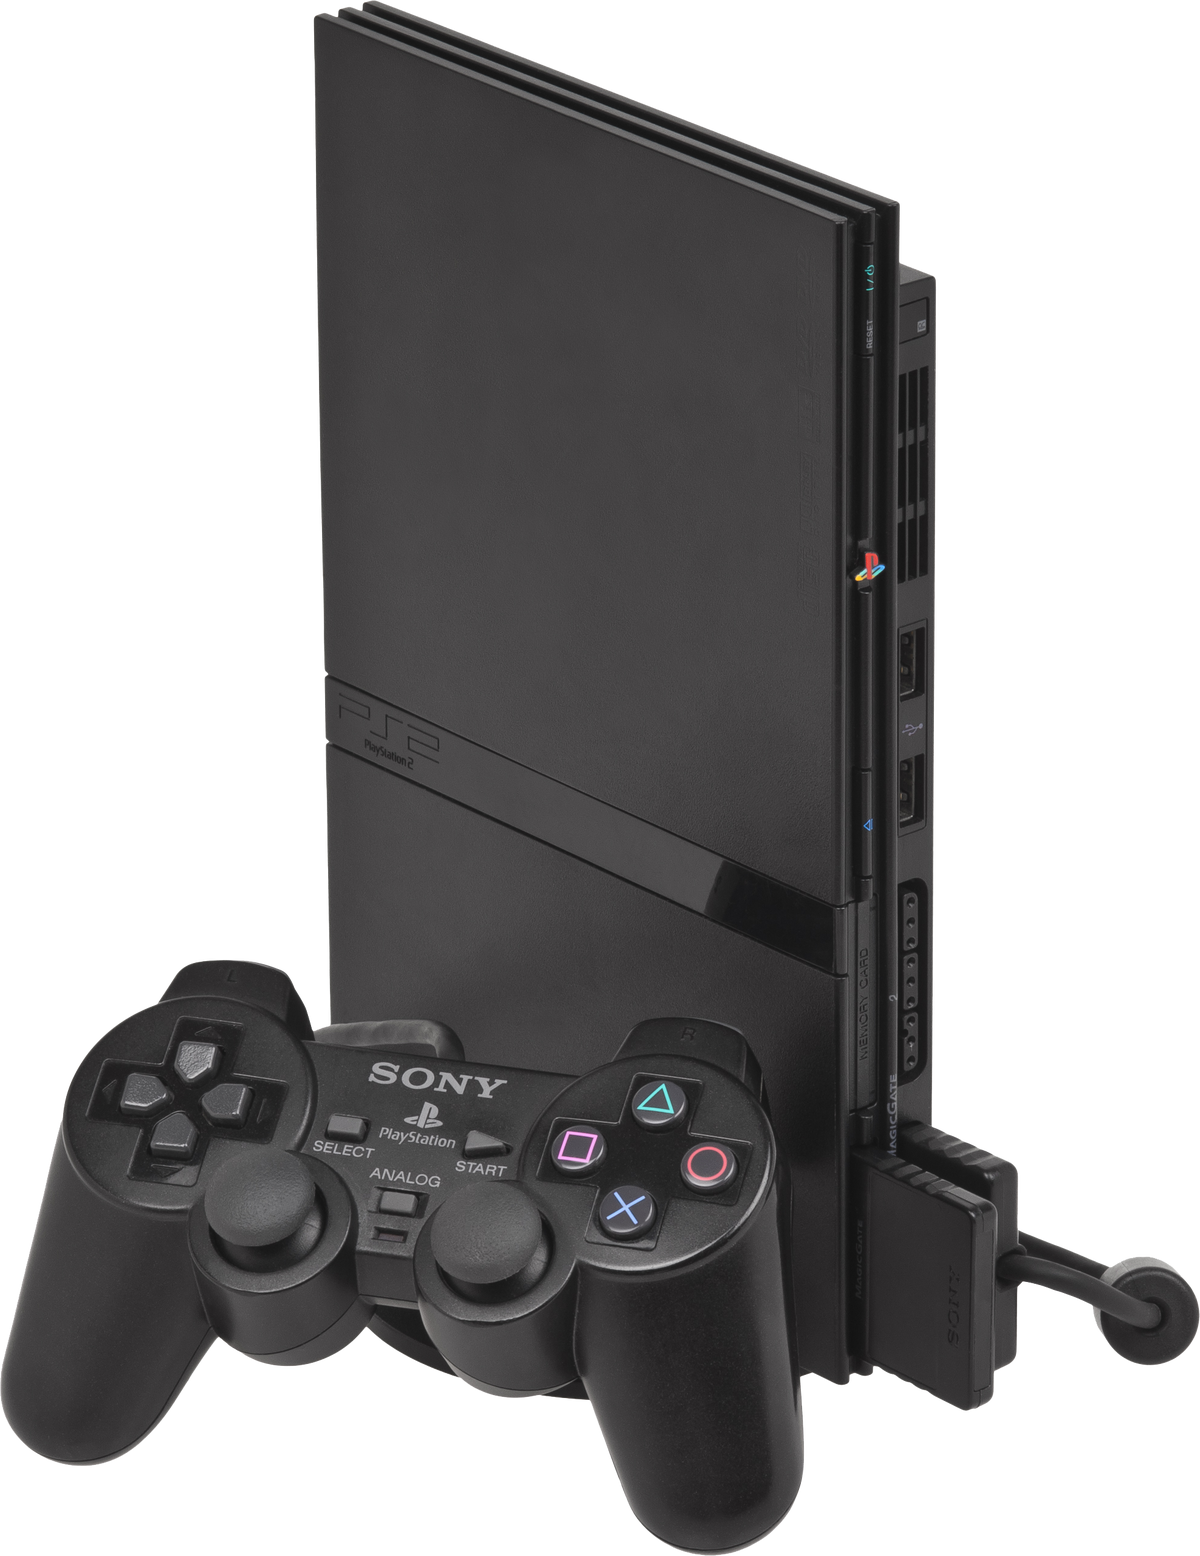 PlayStation 2 Expansion Bay - Wikipedia